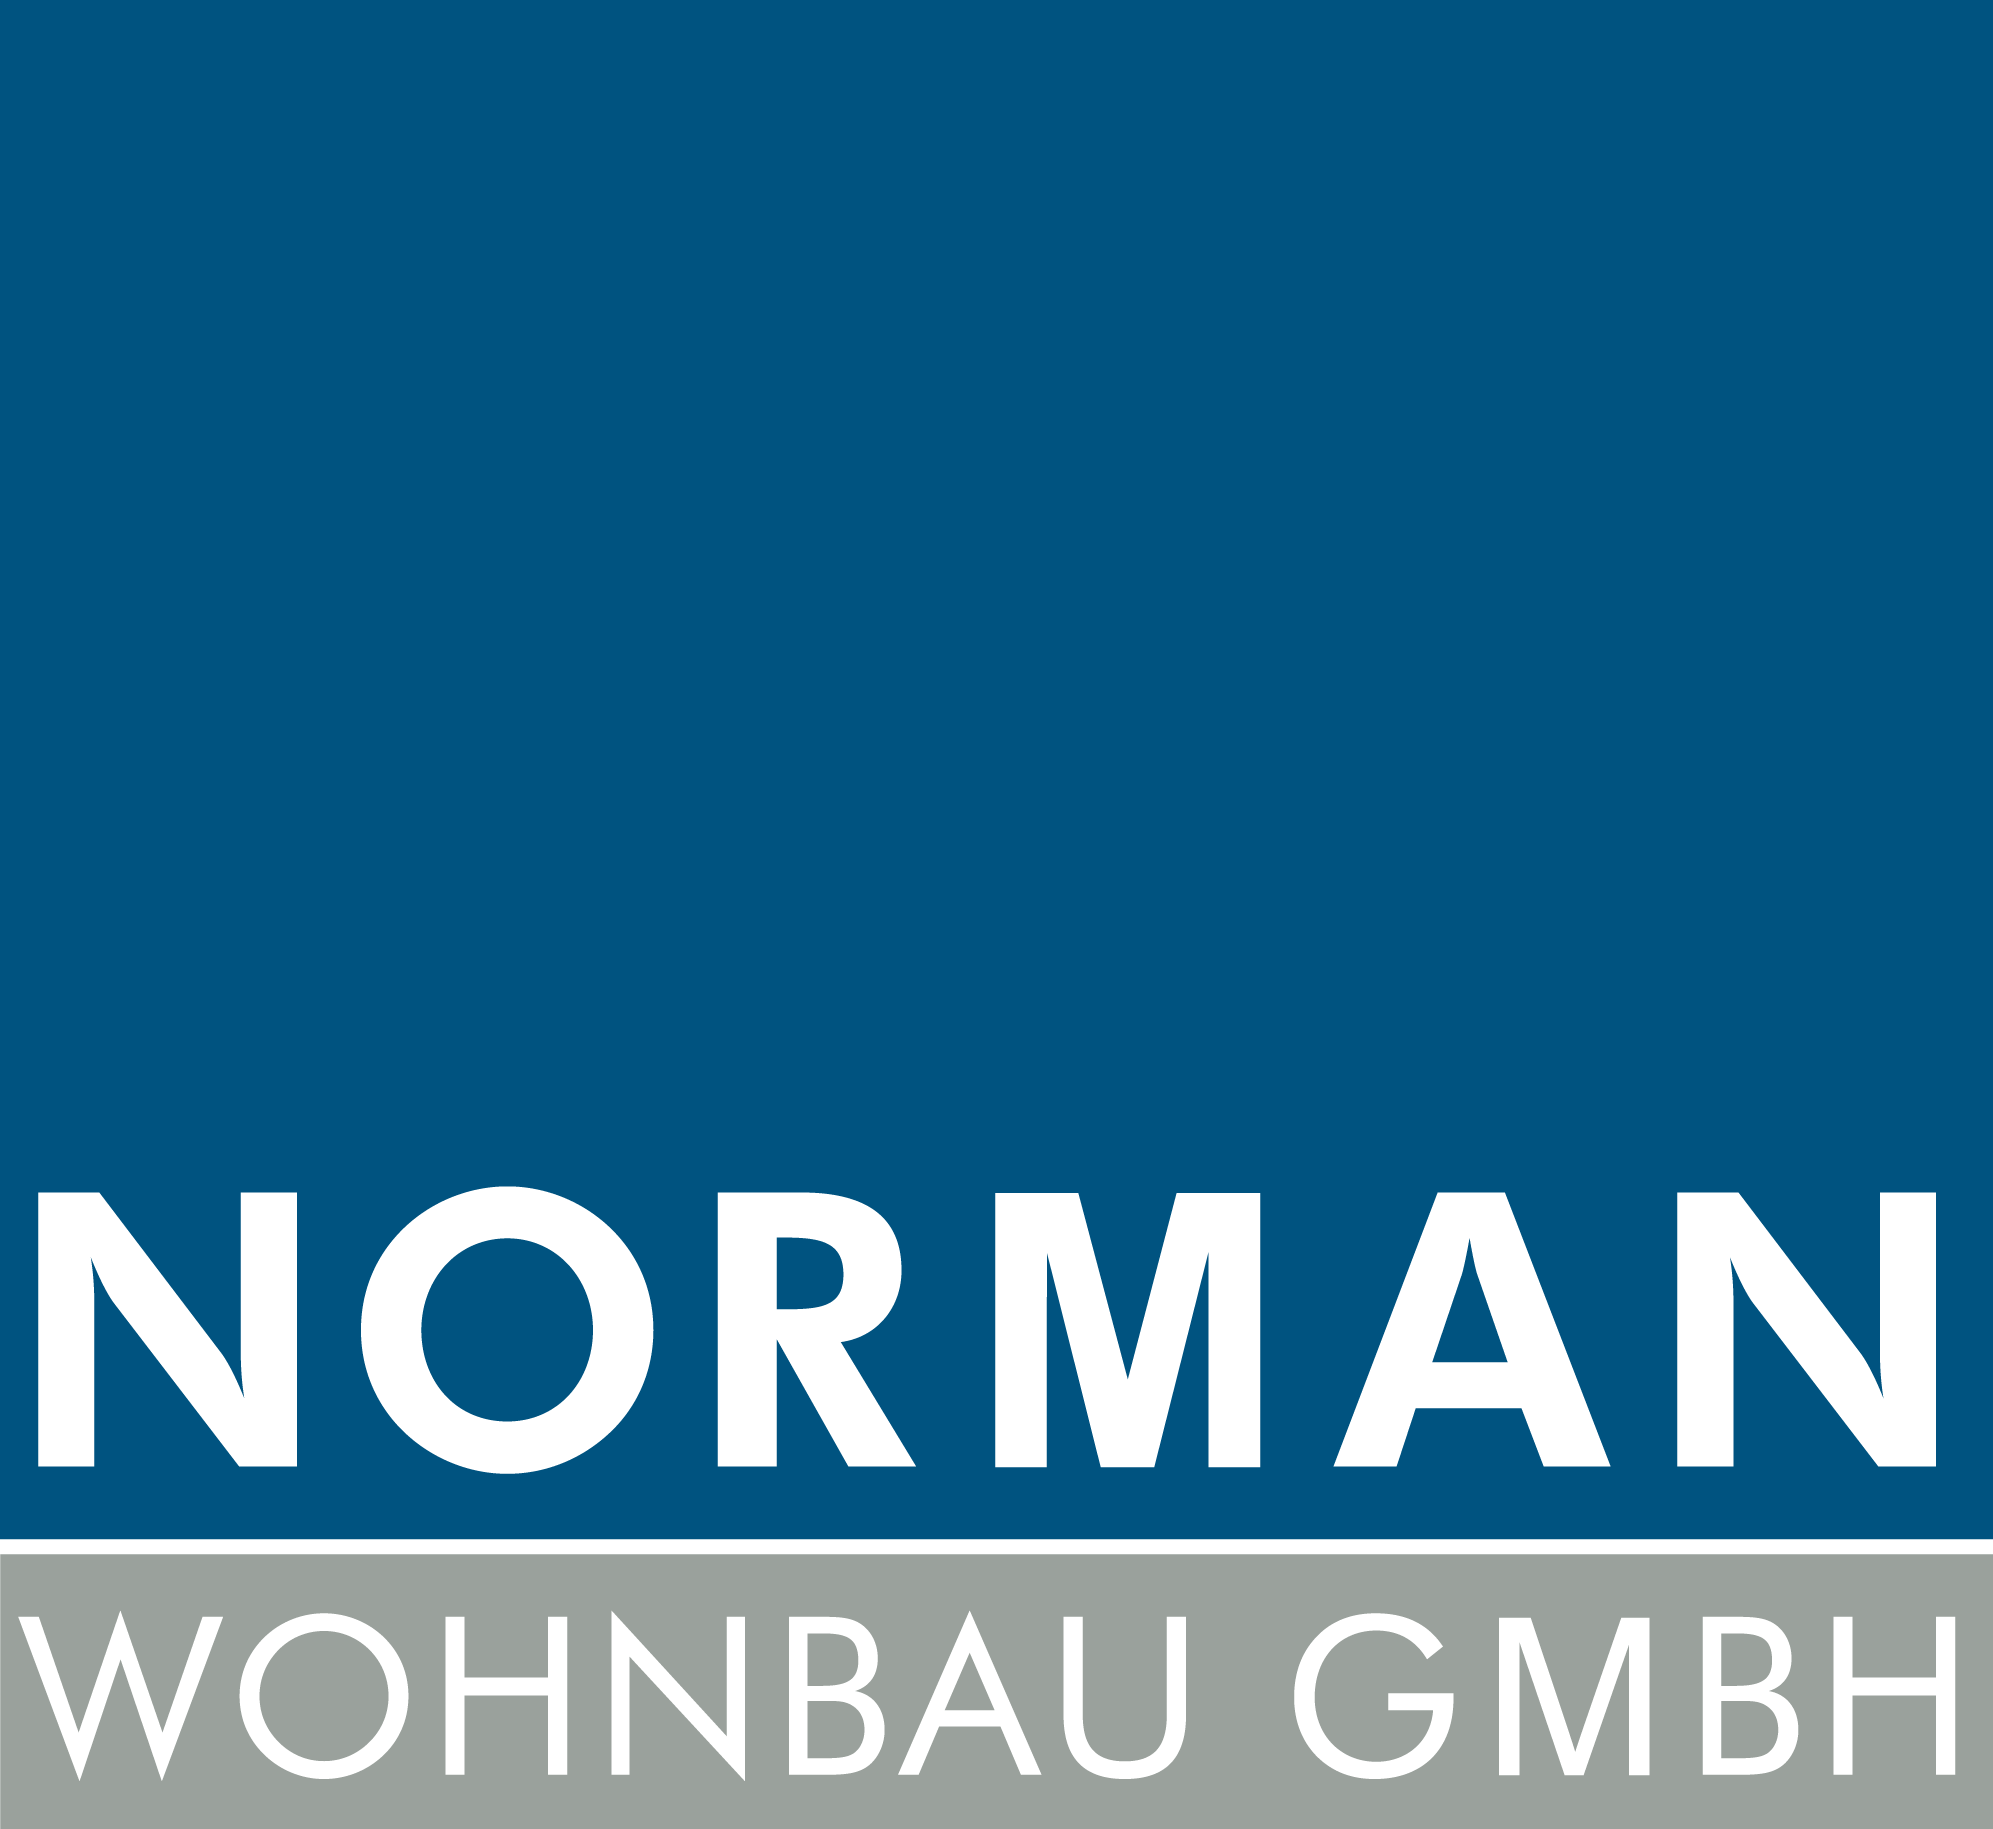 Norman Wohnbau GmbH